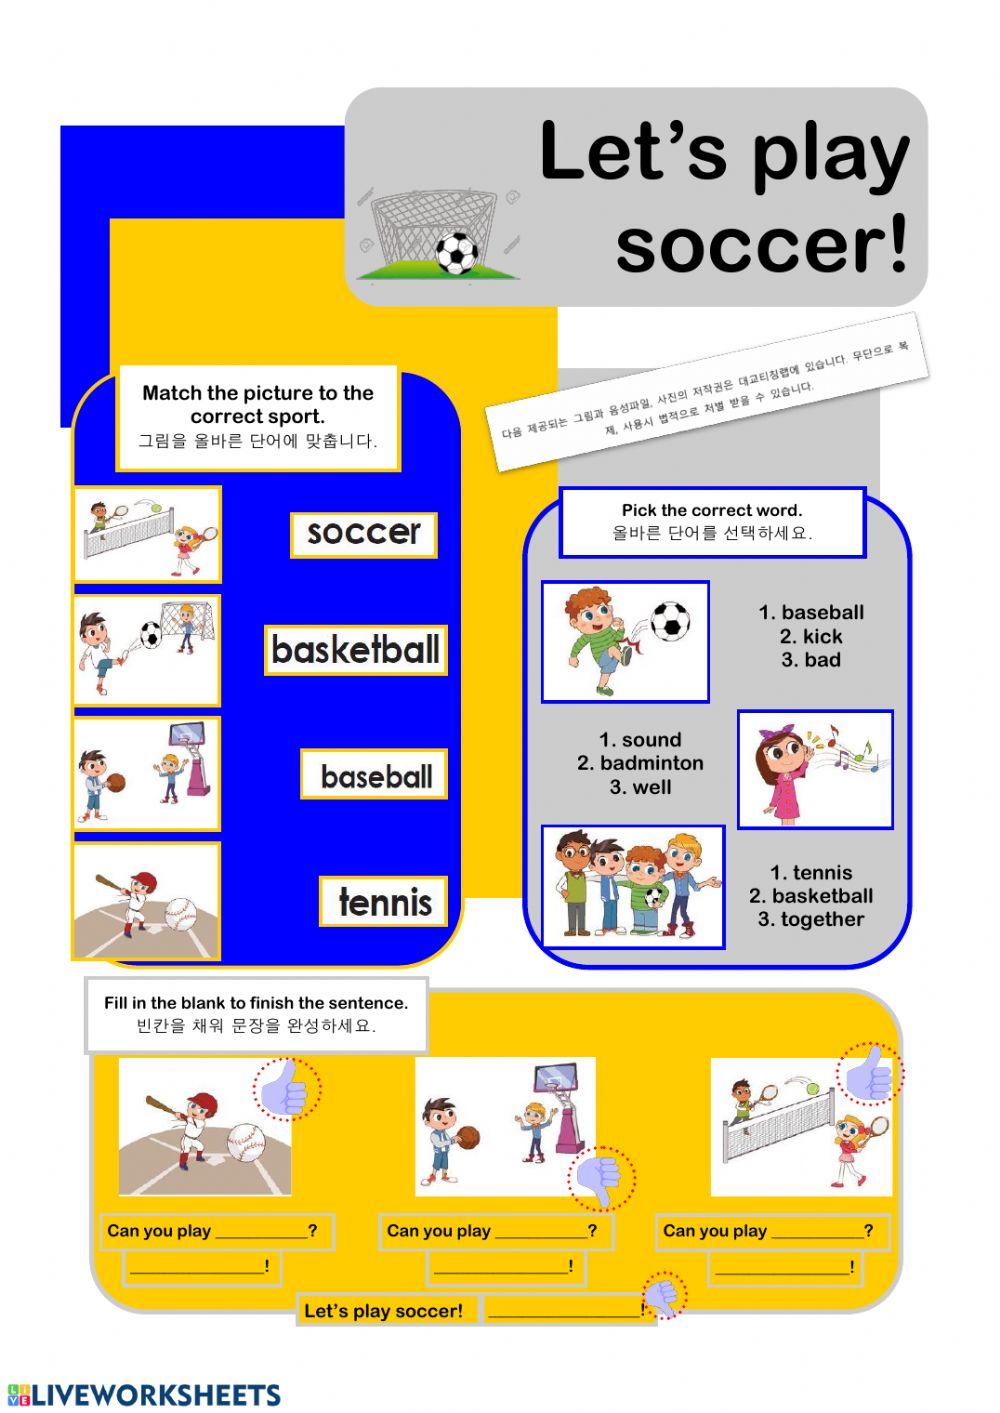 Let's play soccer! Worksheet